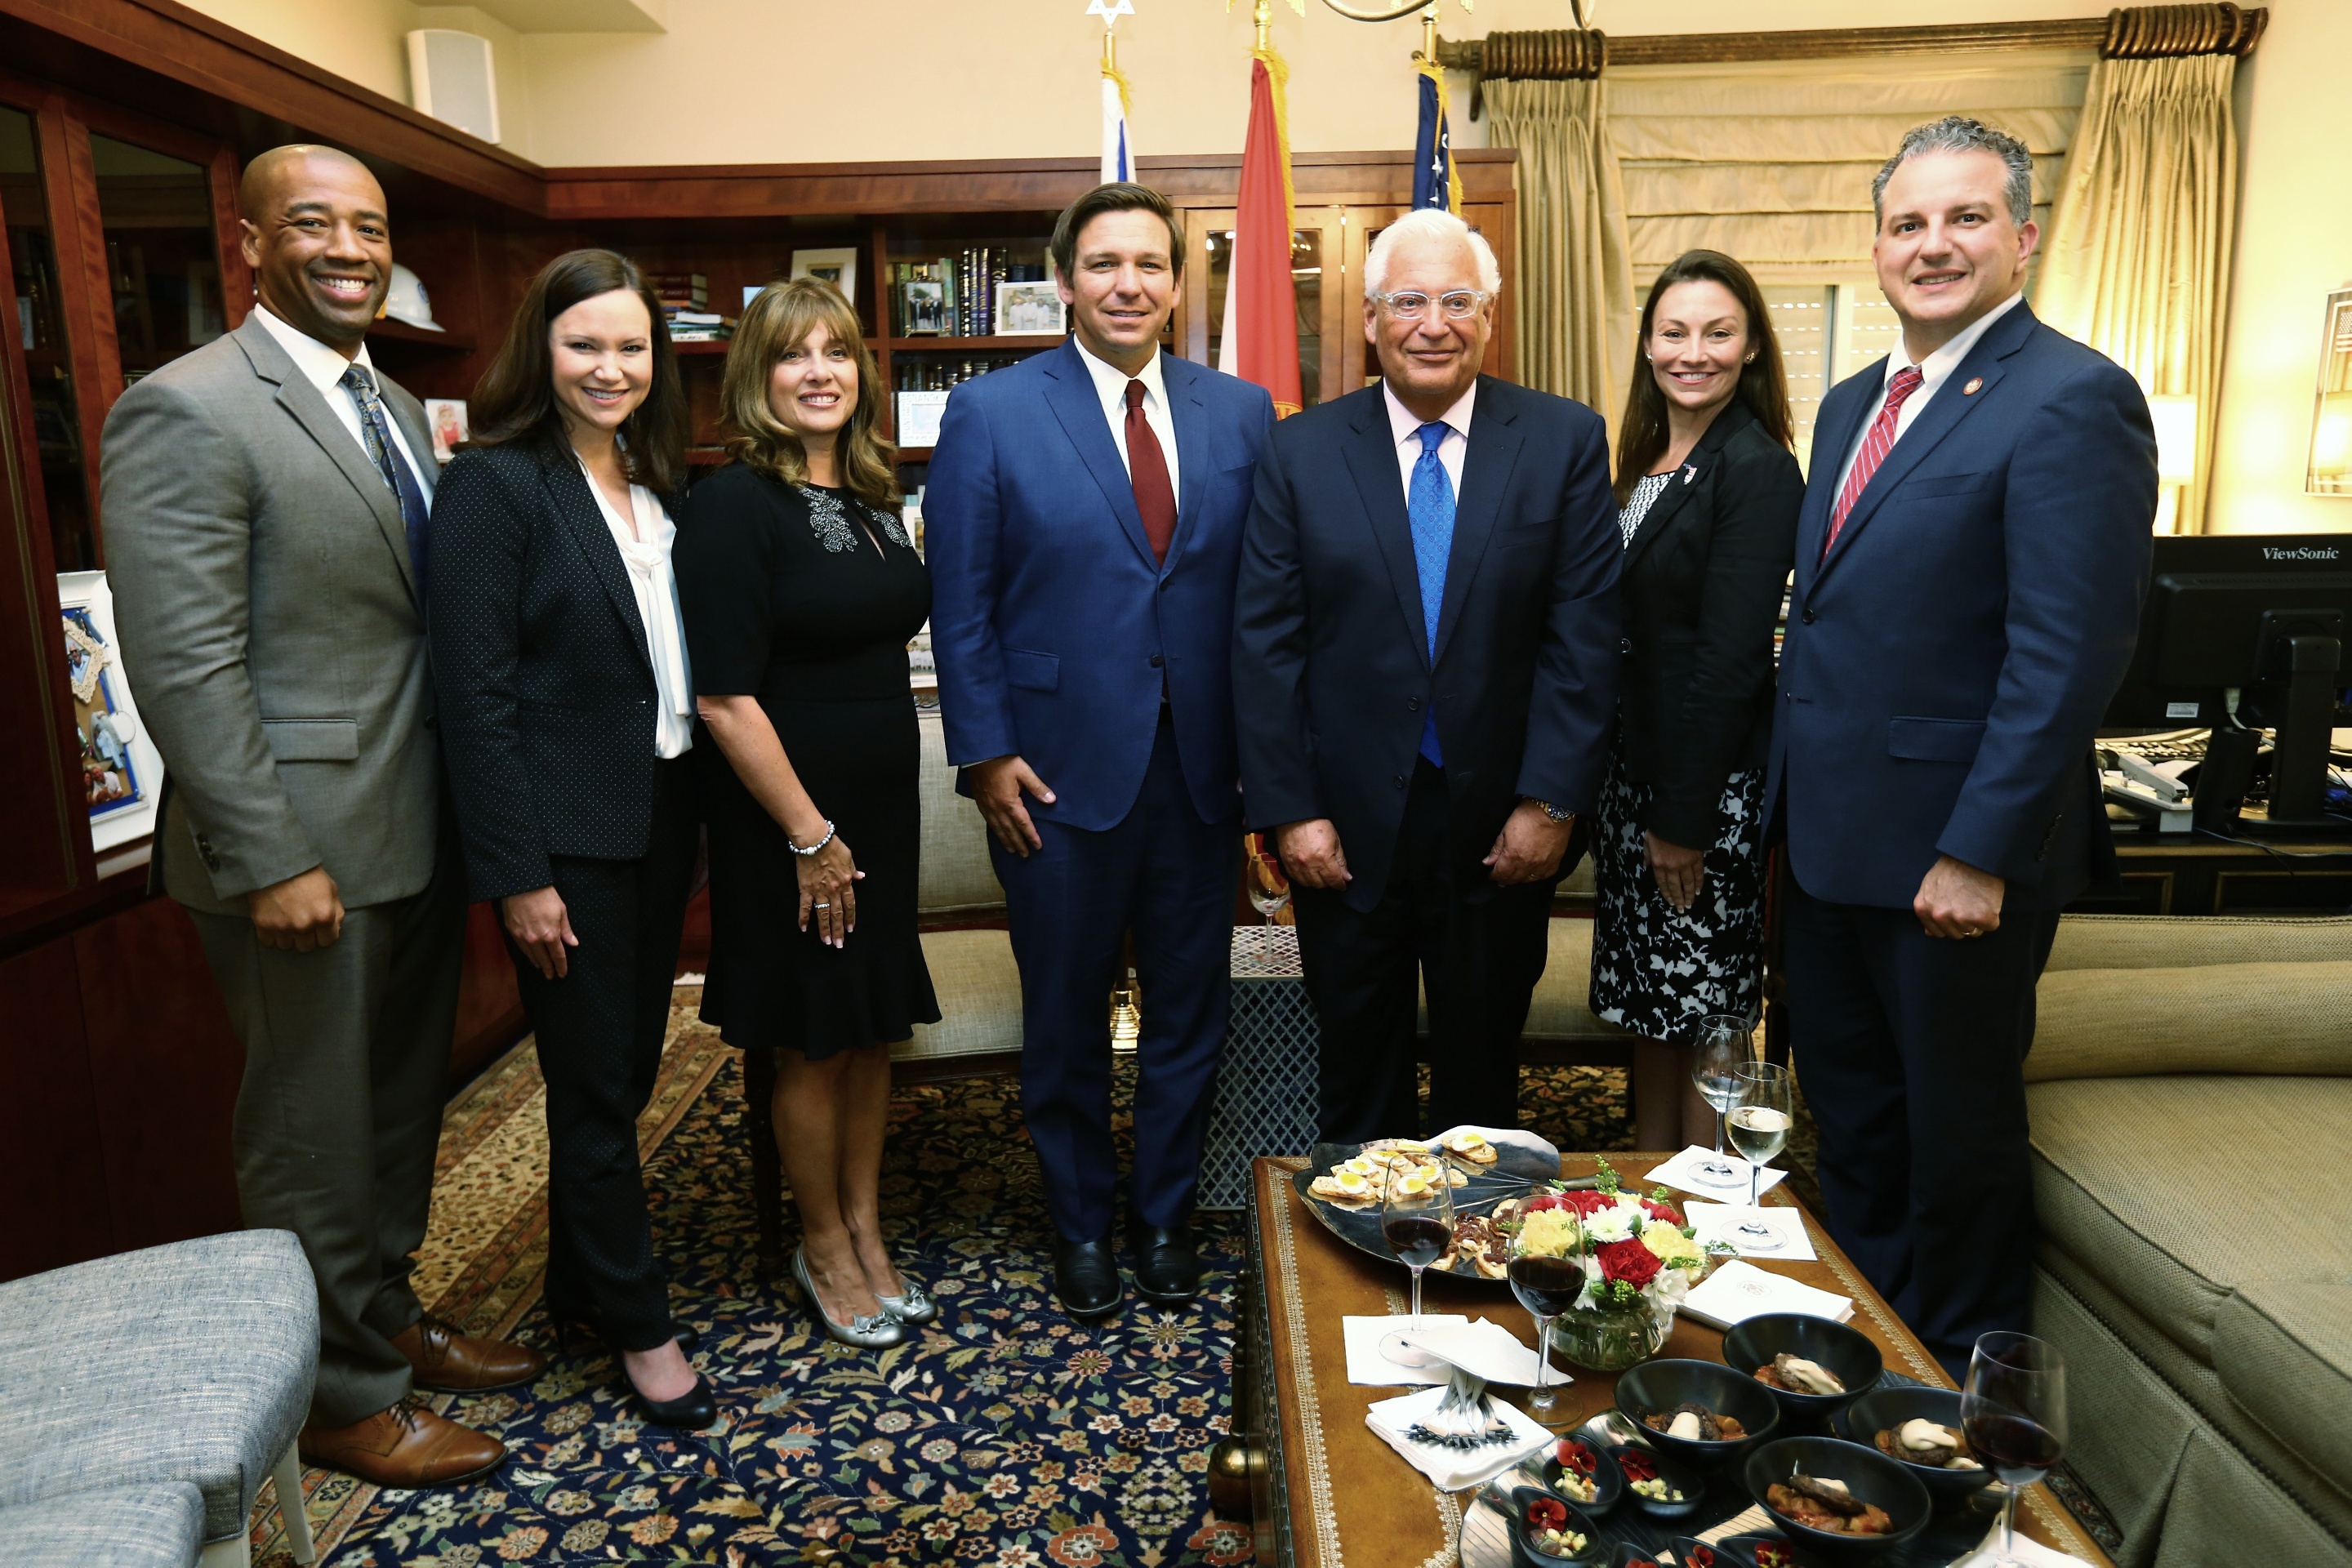   PHOTO RELEASE Governor Ron DeSantis and Florida Cabinet Meet with U.S. Ambassador to Israel David Friedman